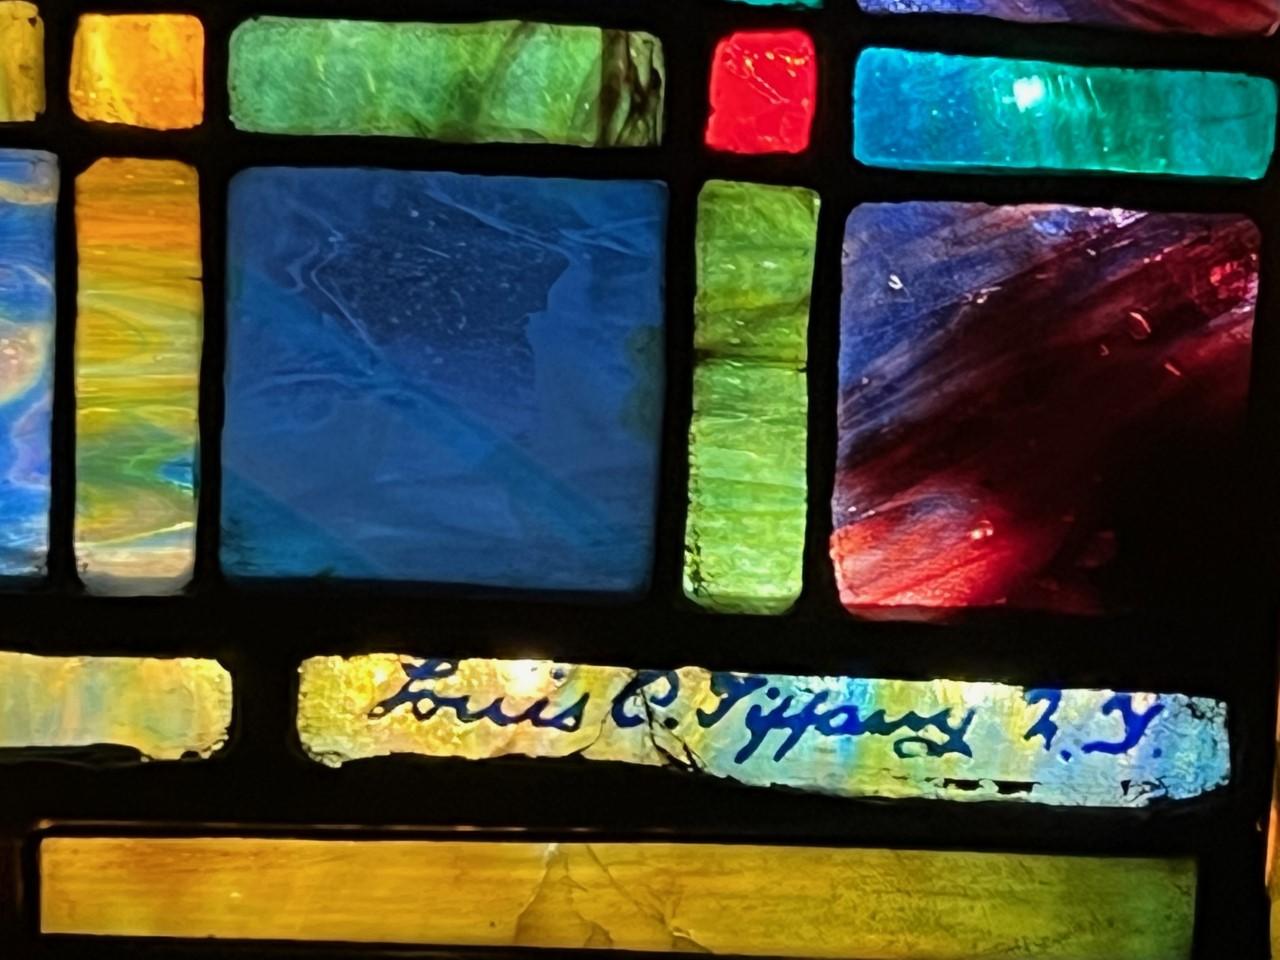 American Louis C. Tiffany Studios Medallion Landscape Museum Art Glass Window